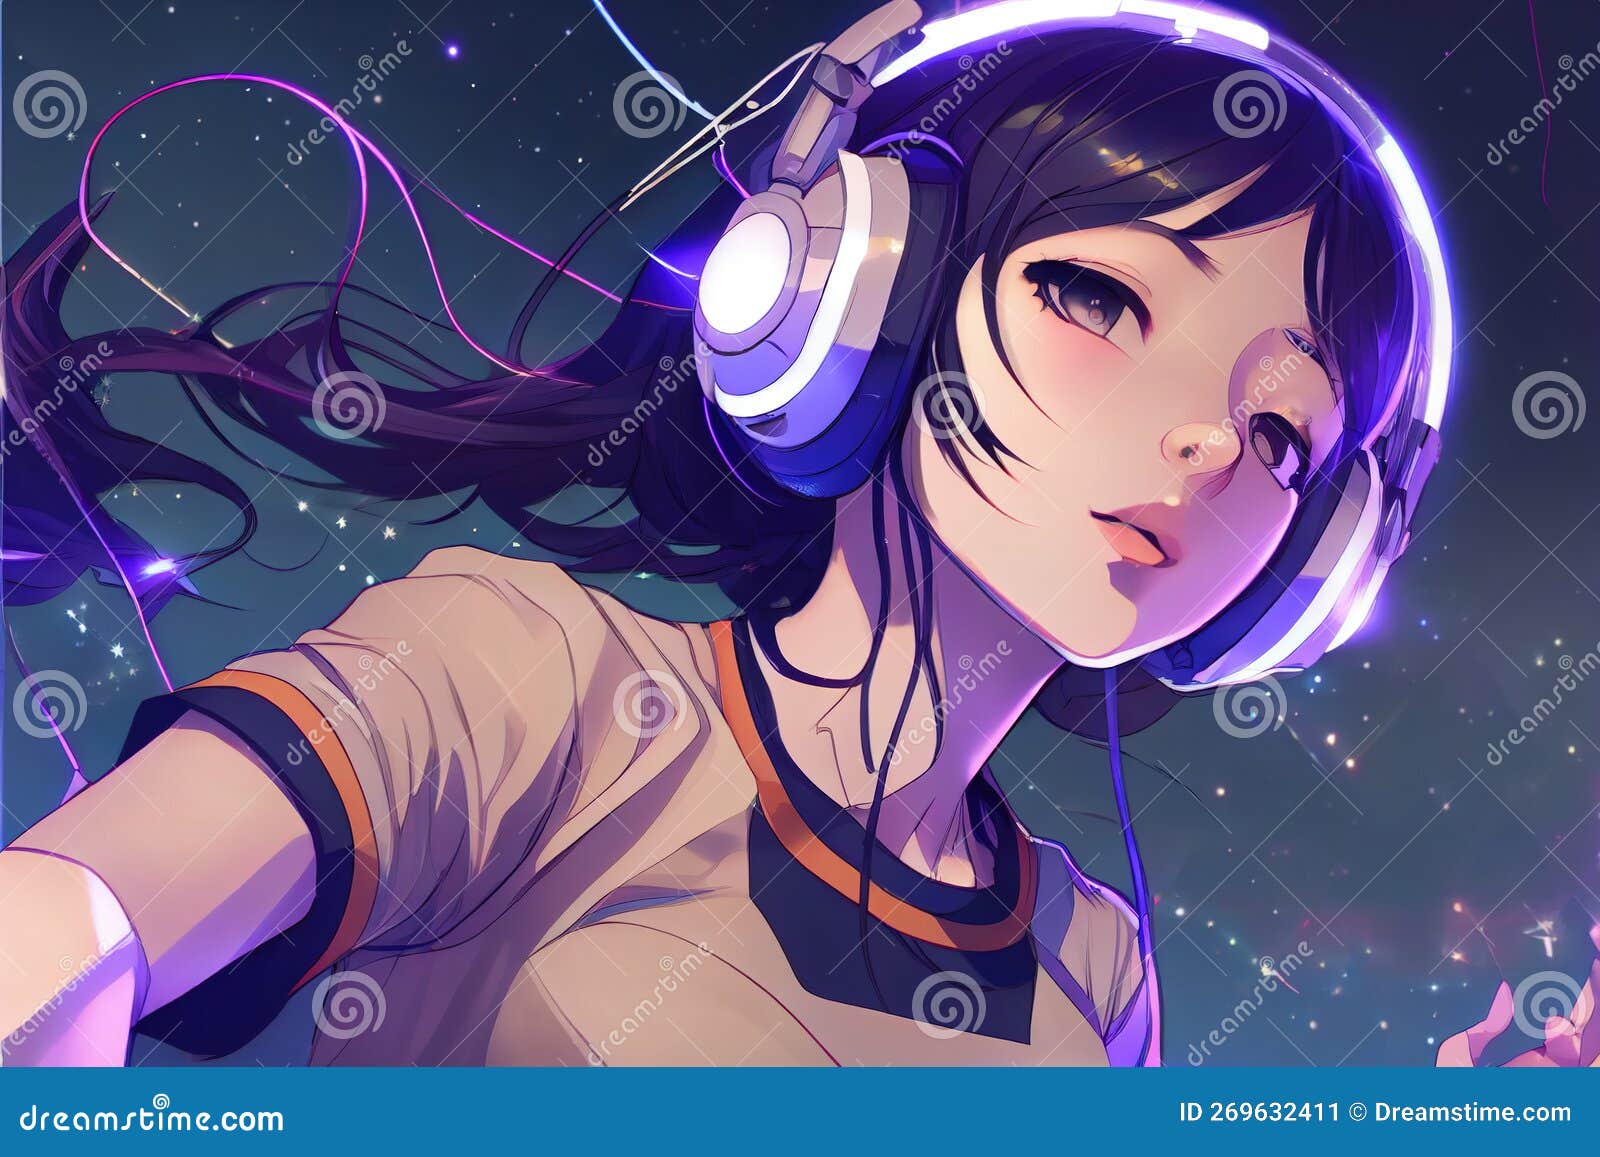 caroline martinez recommends Anime Girl Wearing Headphones